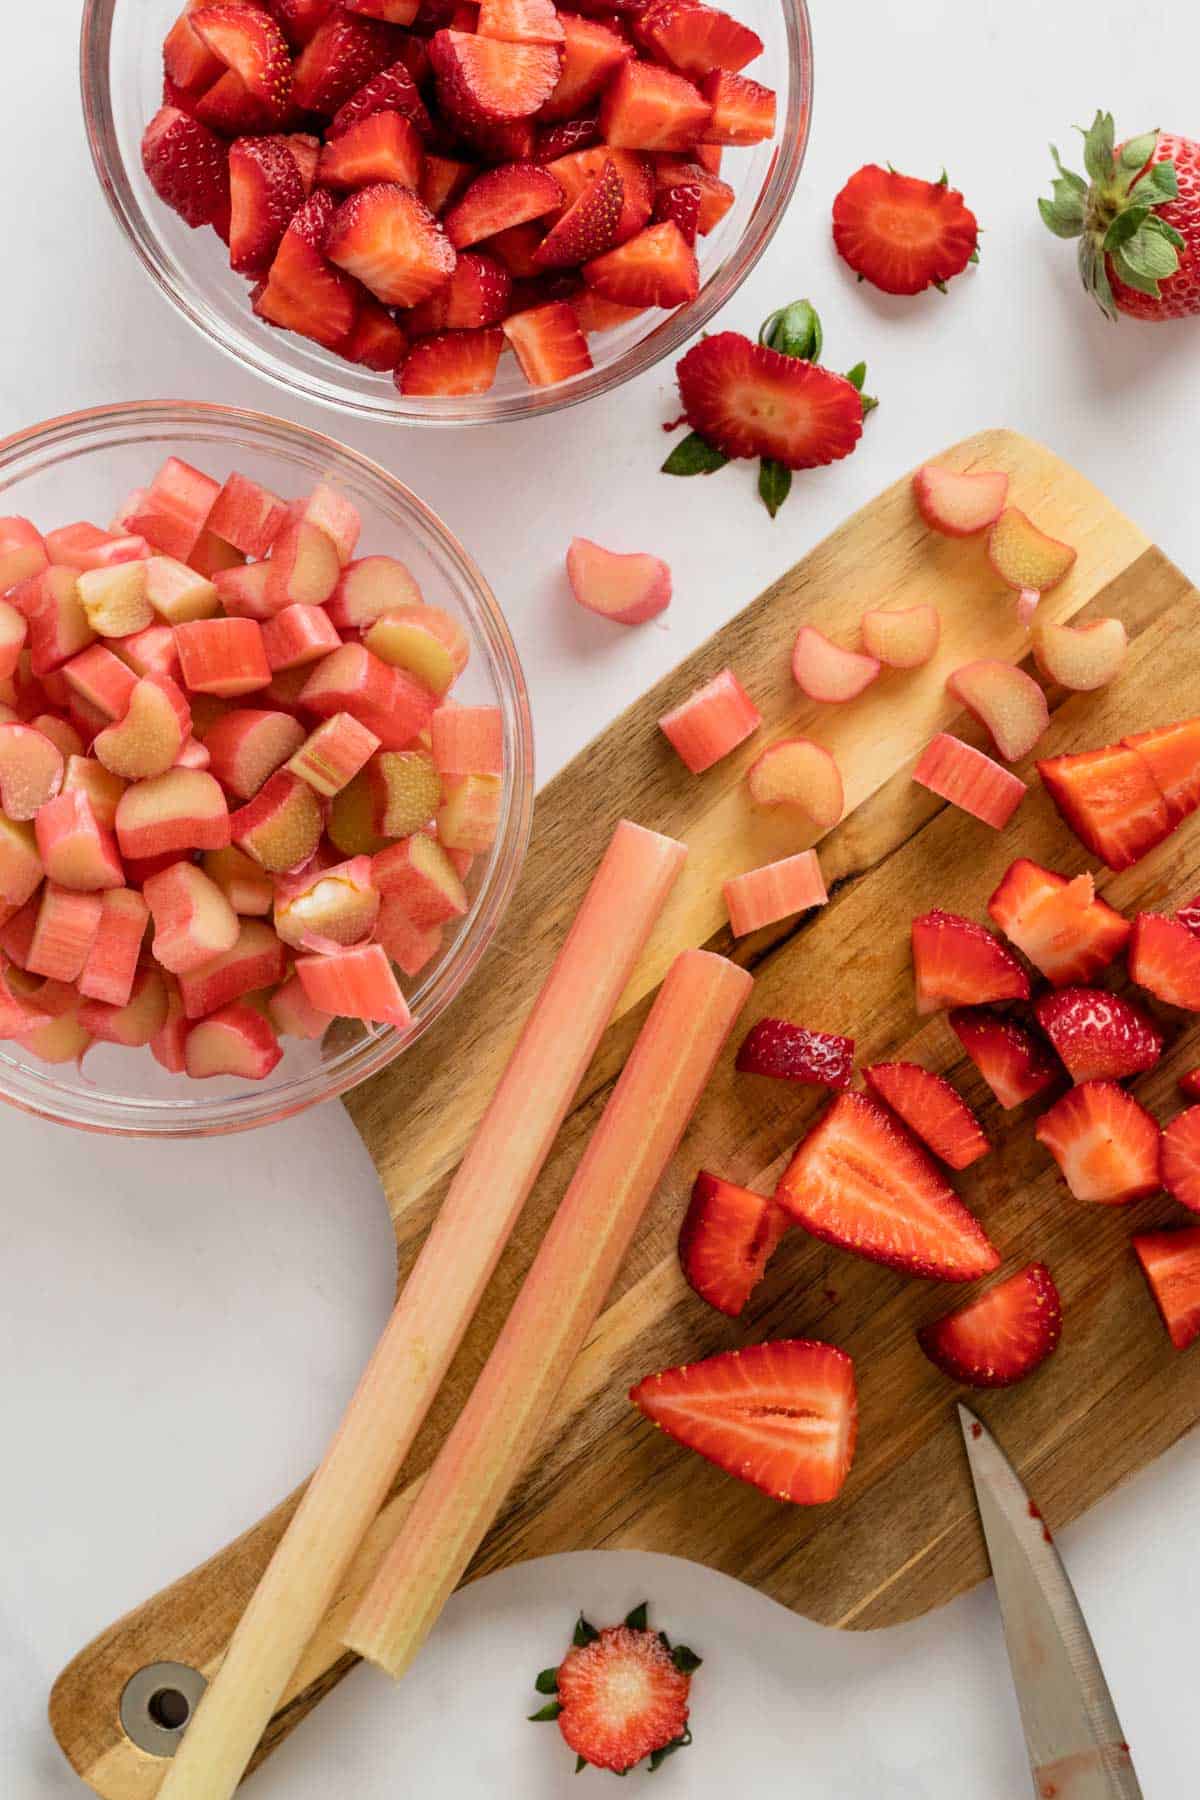 strawberries and rhubarb slices